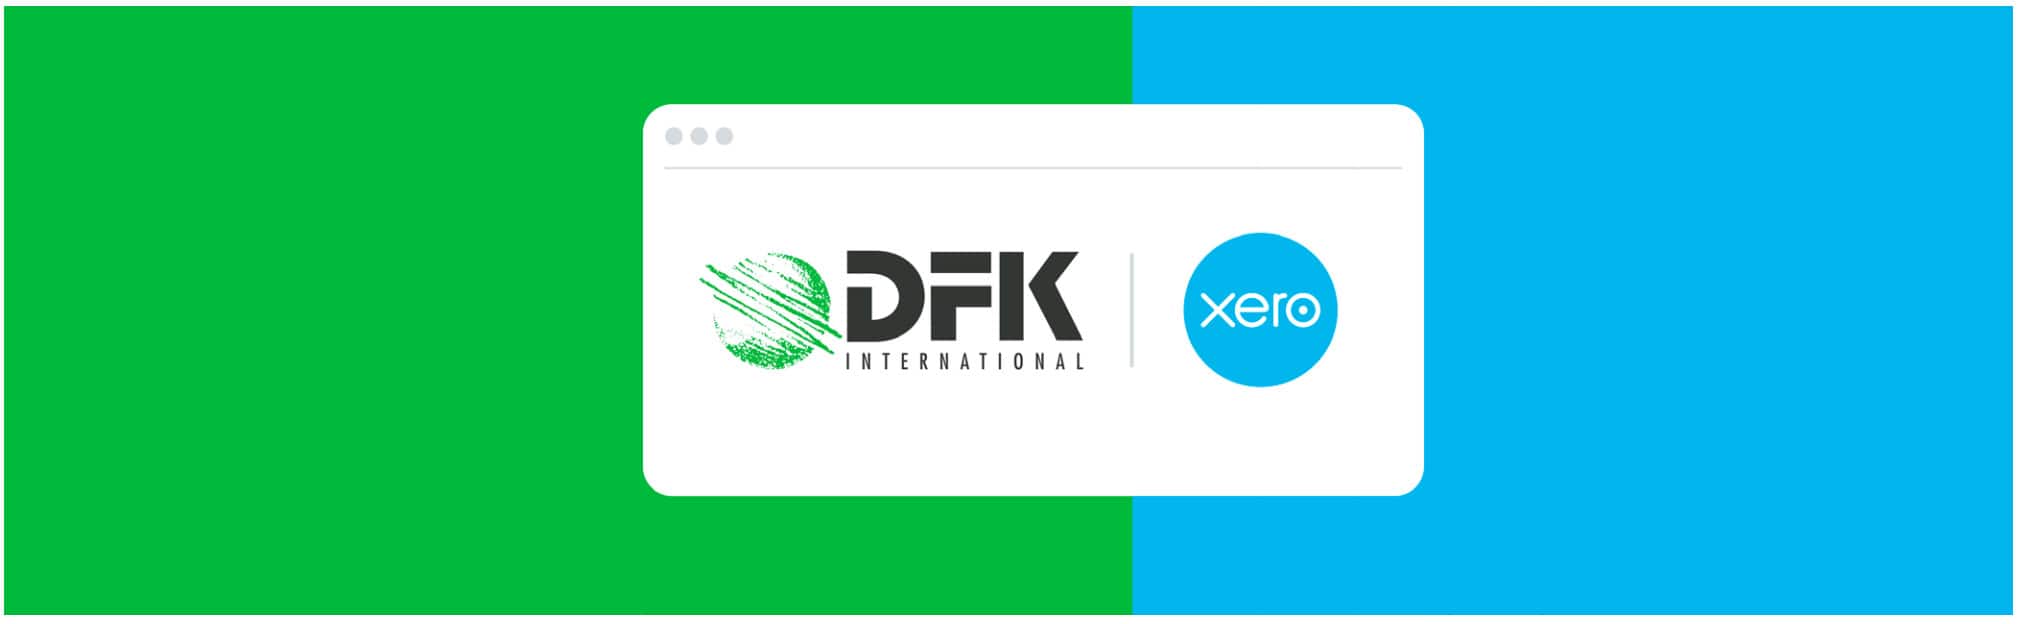 Logos of DFK International and Xero